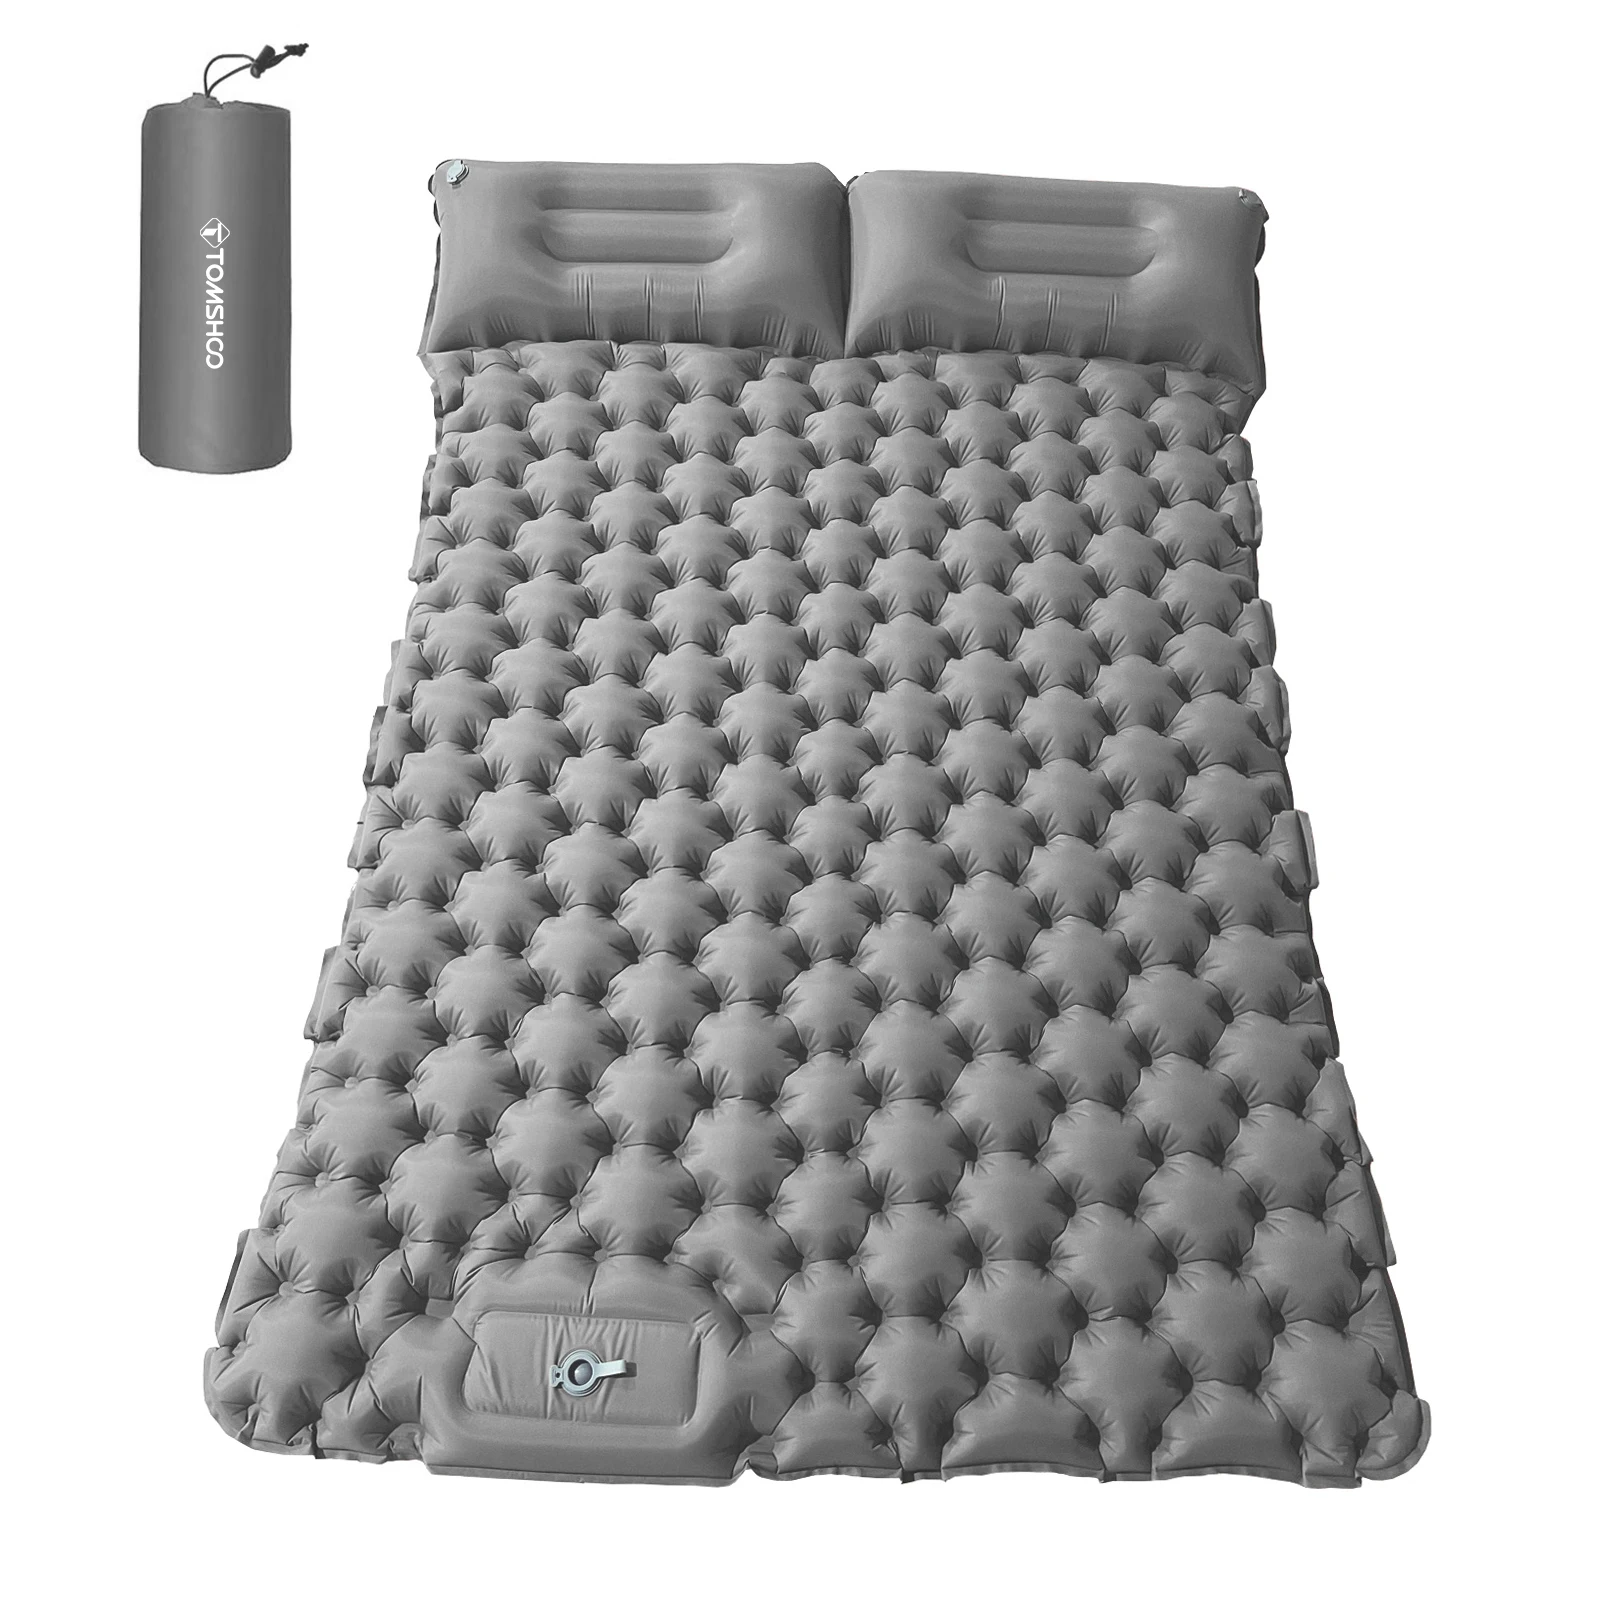 

TOMSHOO 2 Person Camping Mat with Air Pillow Portable Air Mattress Waterproof Backpacking Sleeping Pad